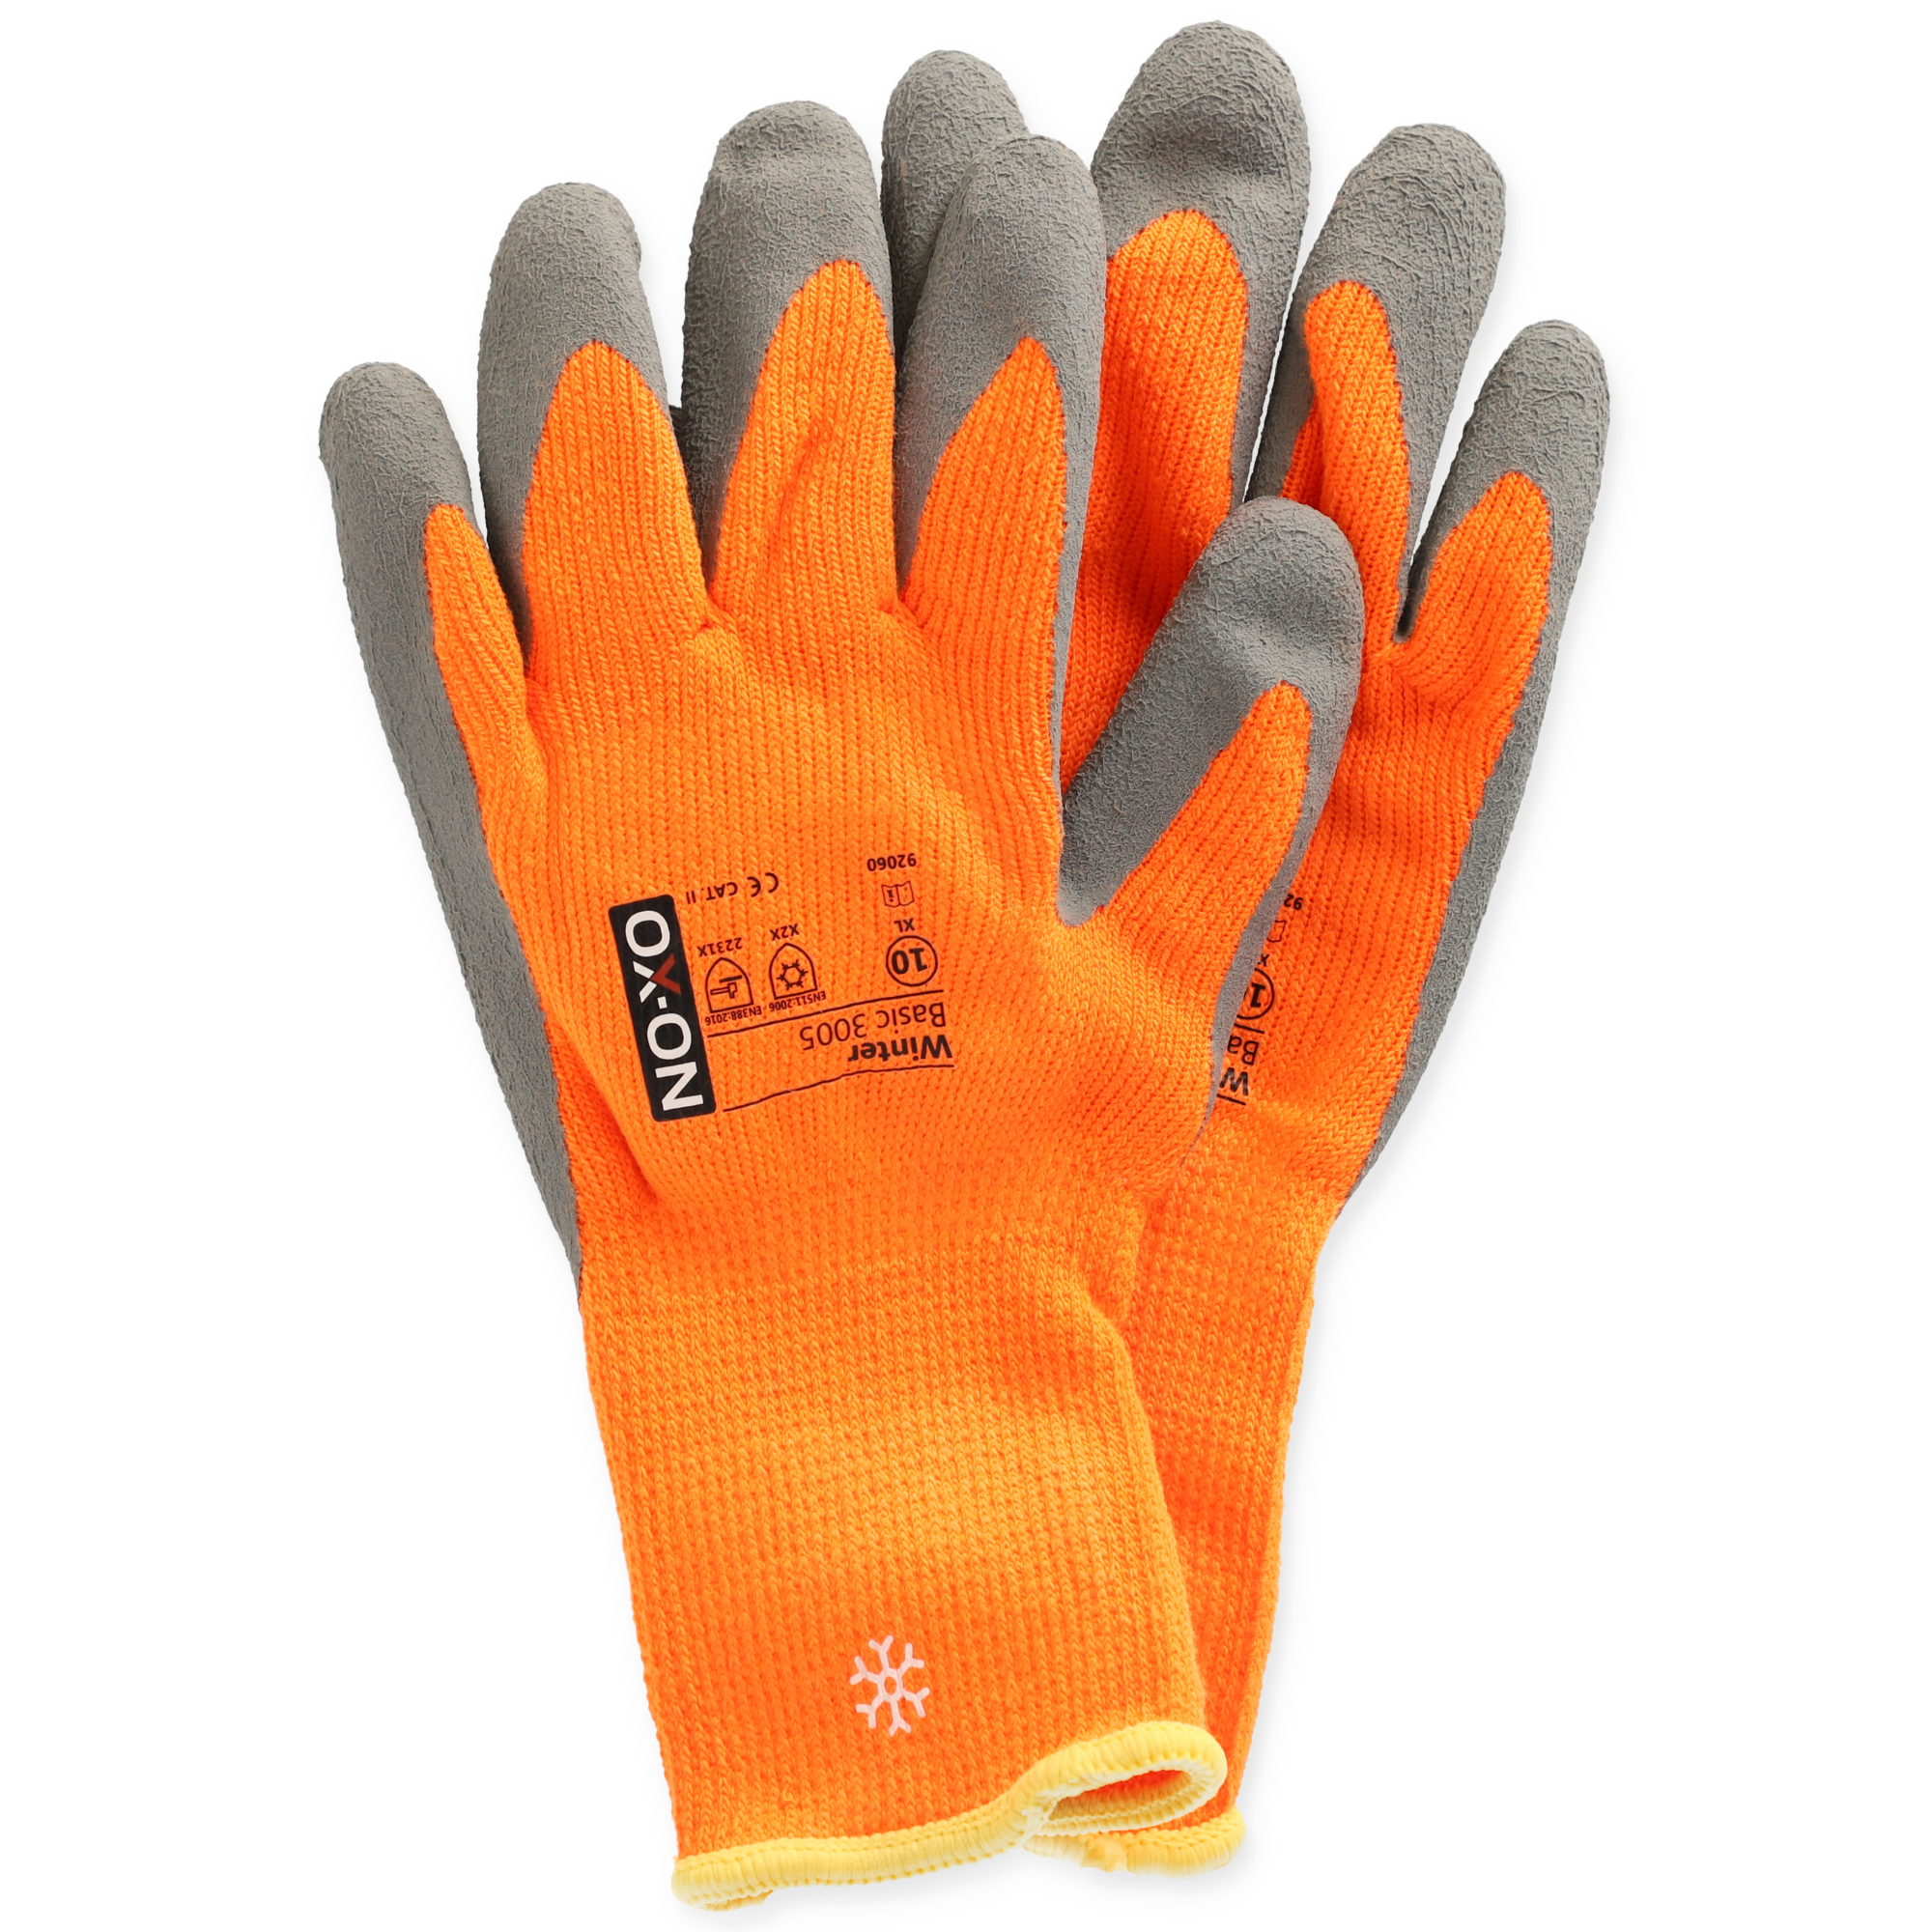 Handschuhe 'Basic 3005' orange Gr. 9 + product picture